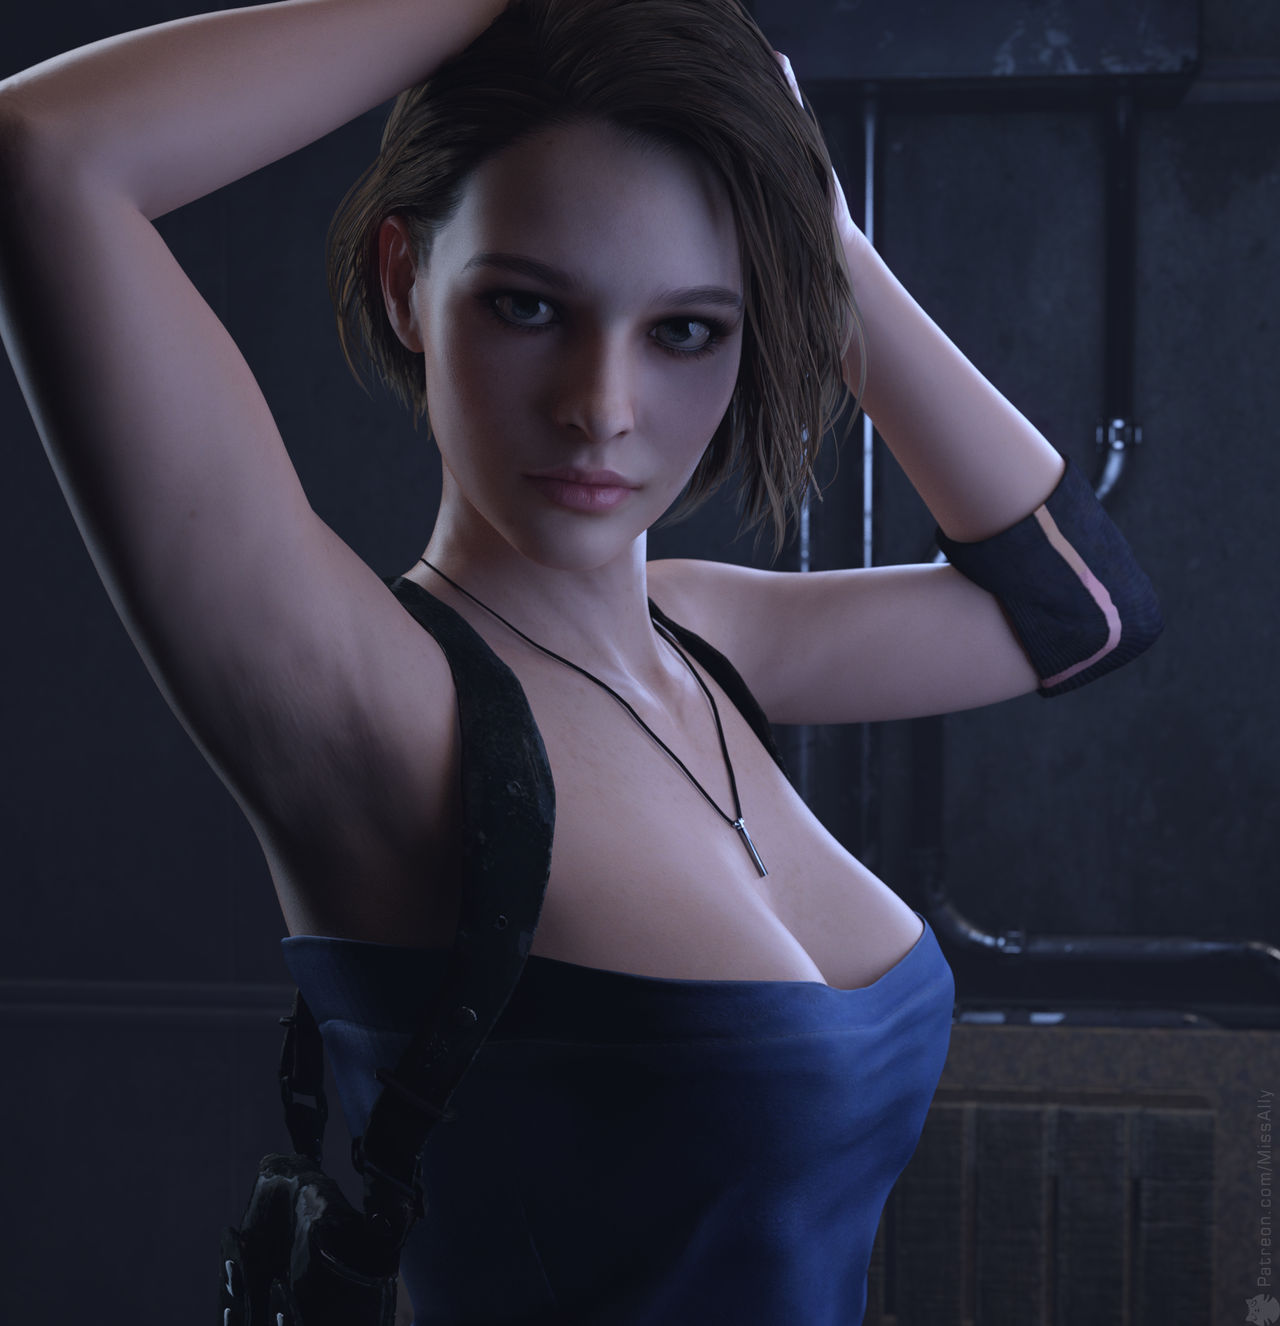 Jill Valentine (Resident Evil 3 Remake). by EzioMaverick on DeviantArt